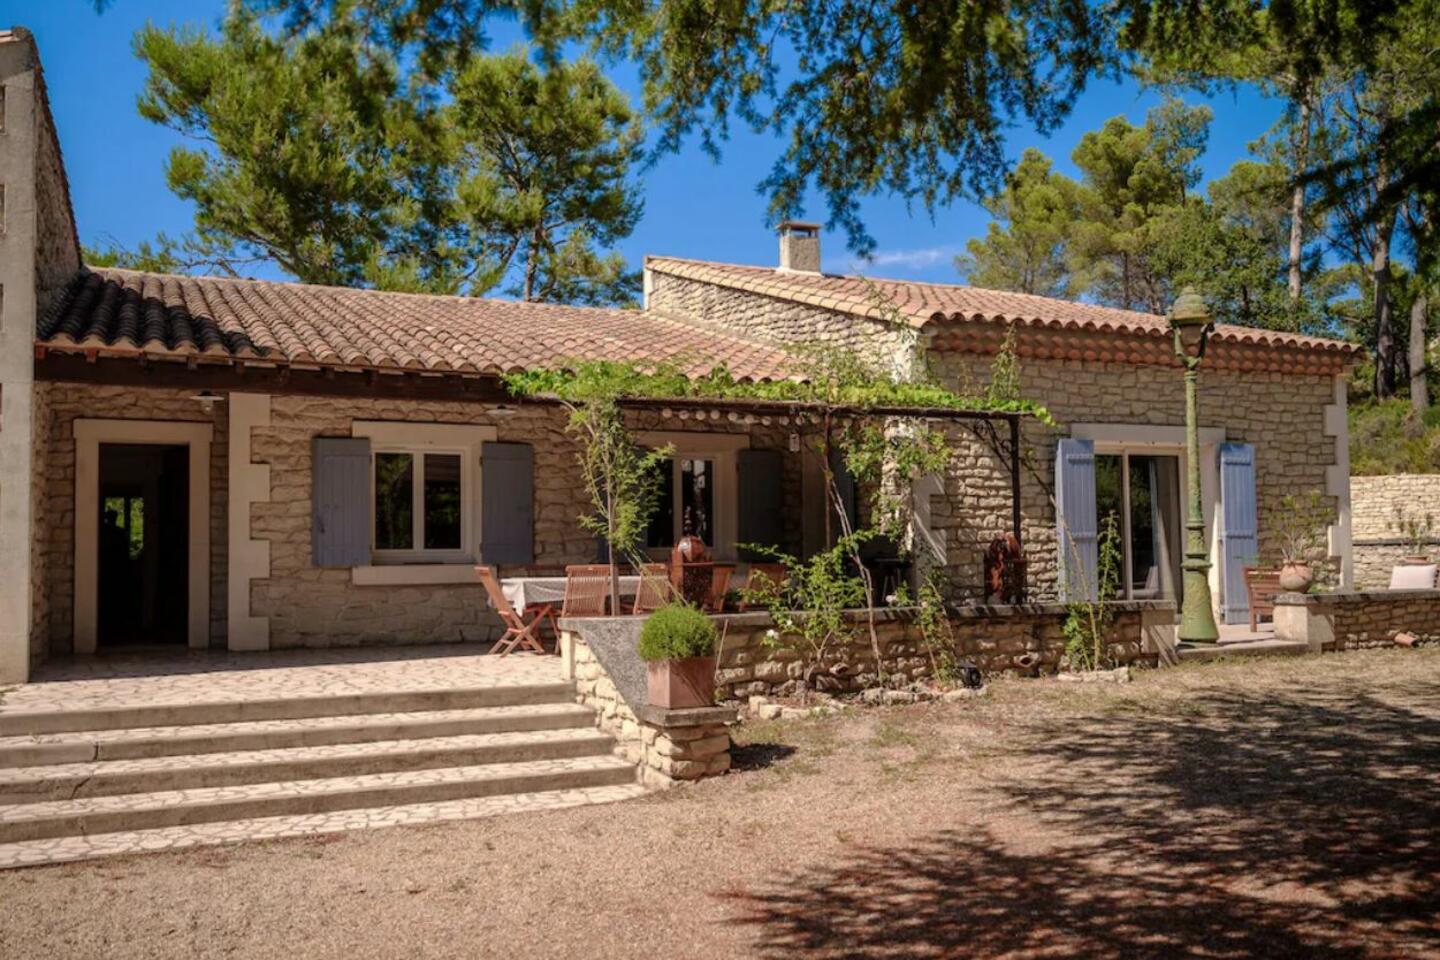 13 - Maison Provence: Villa: Exterior